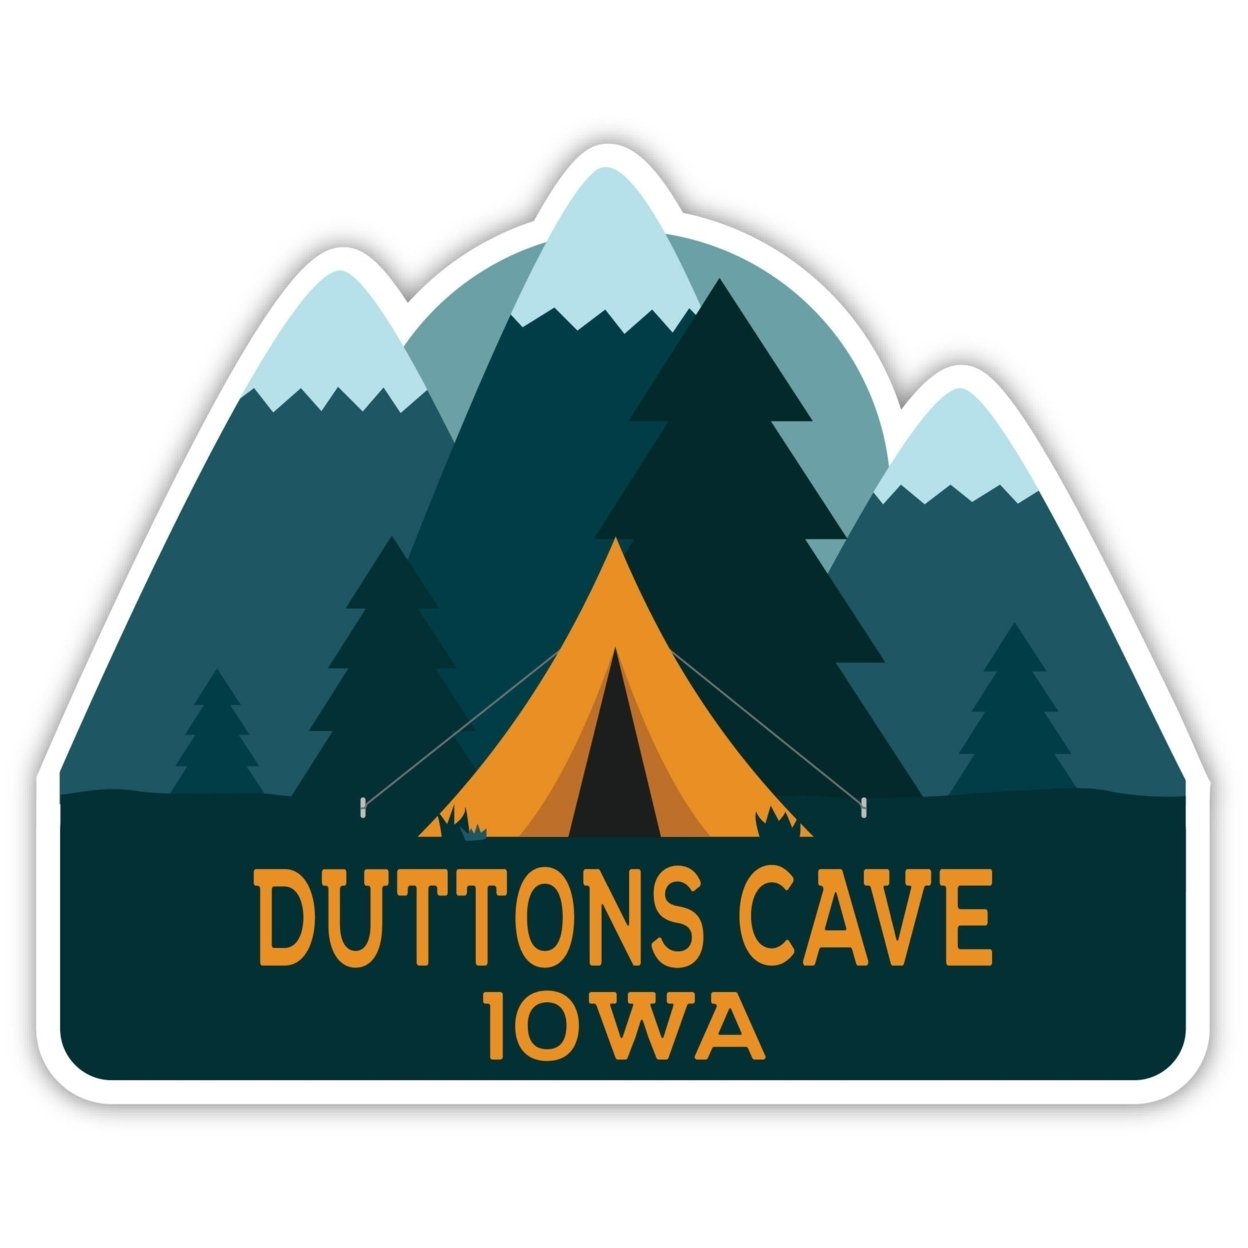 Duttons Cave Iowa Souvenir Decorative Stickers (Choose Theme And Size) - 4-Pack, 6-Inch, Tent